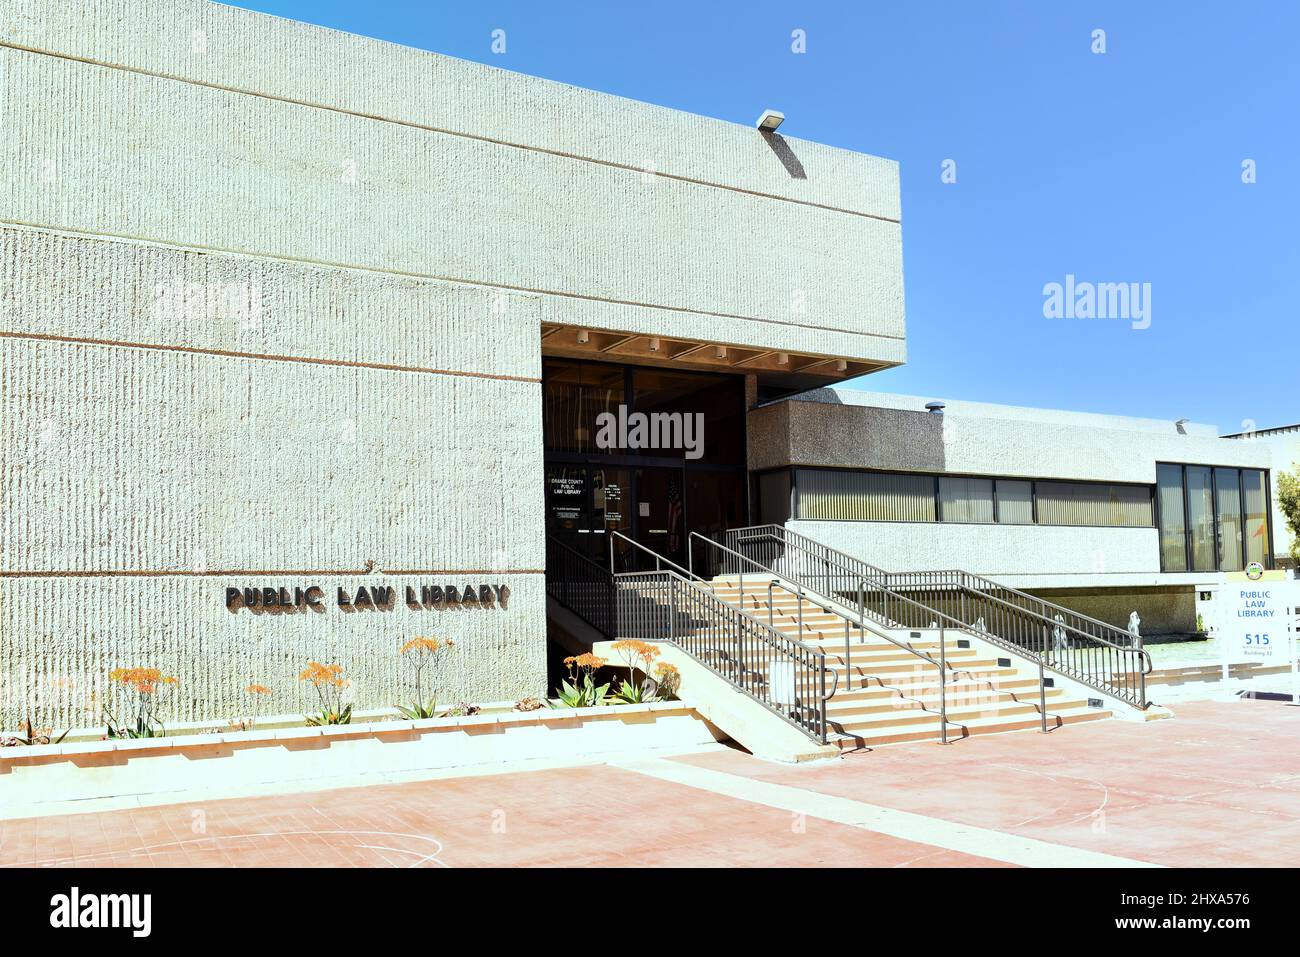 SANTA ANA, CALIFORNIA - 9 MAR 2022: The Public Law Library in the Santa Ana Civic Center Plaza. Stock Photo